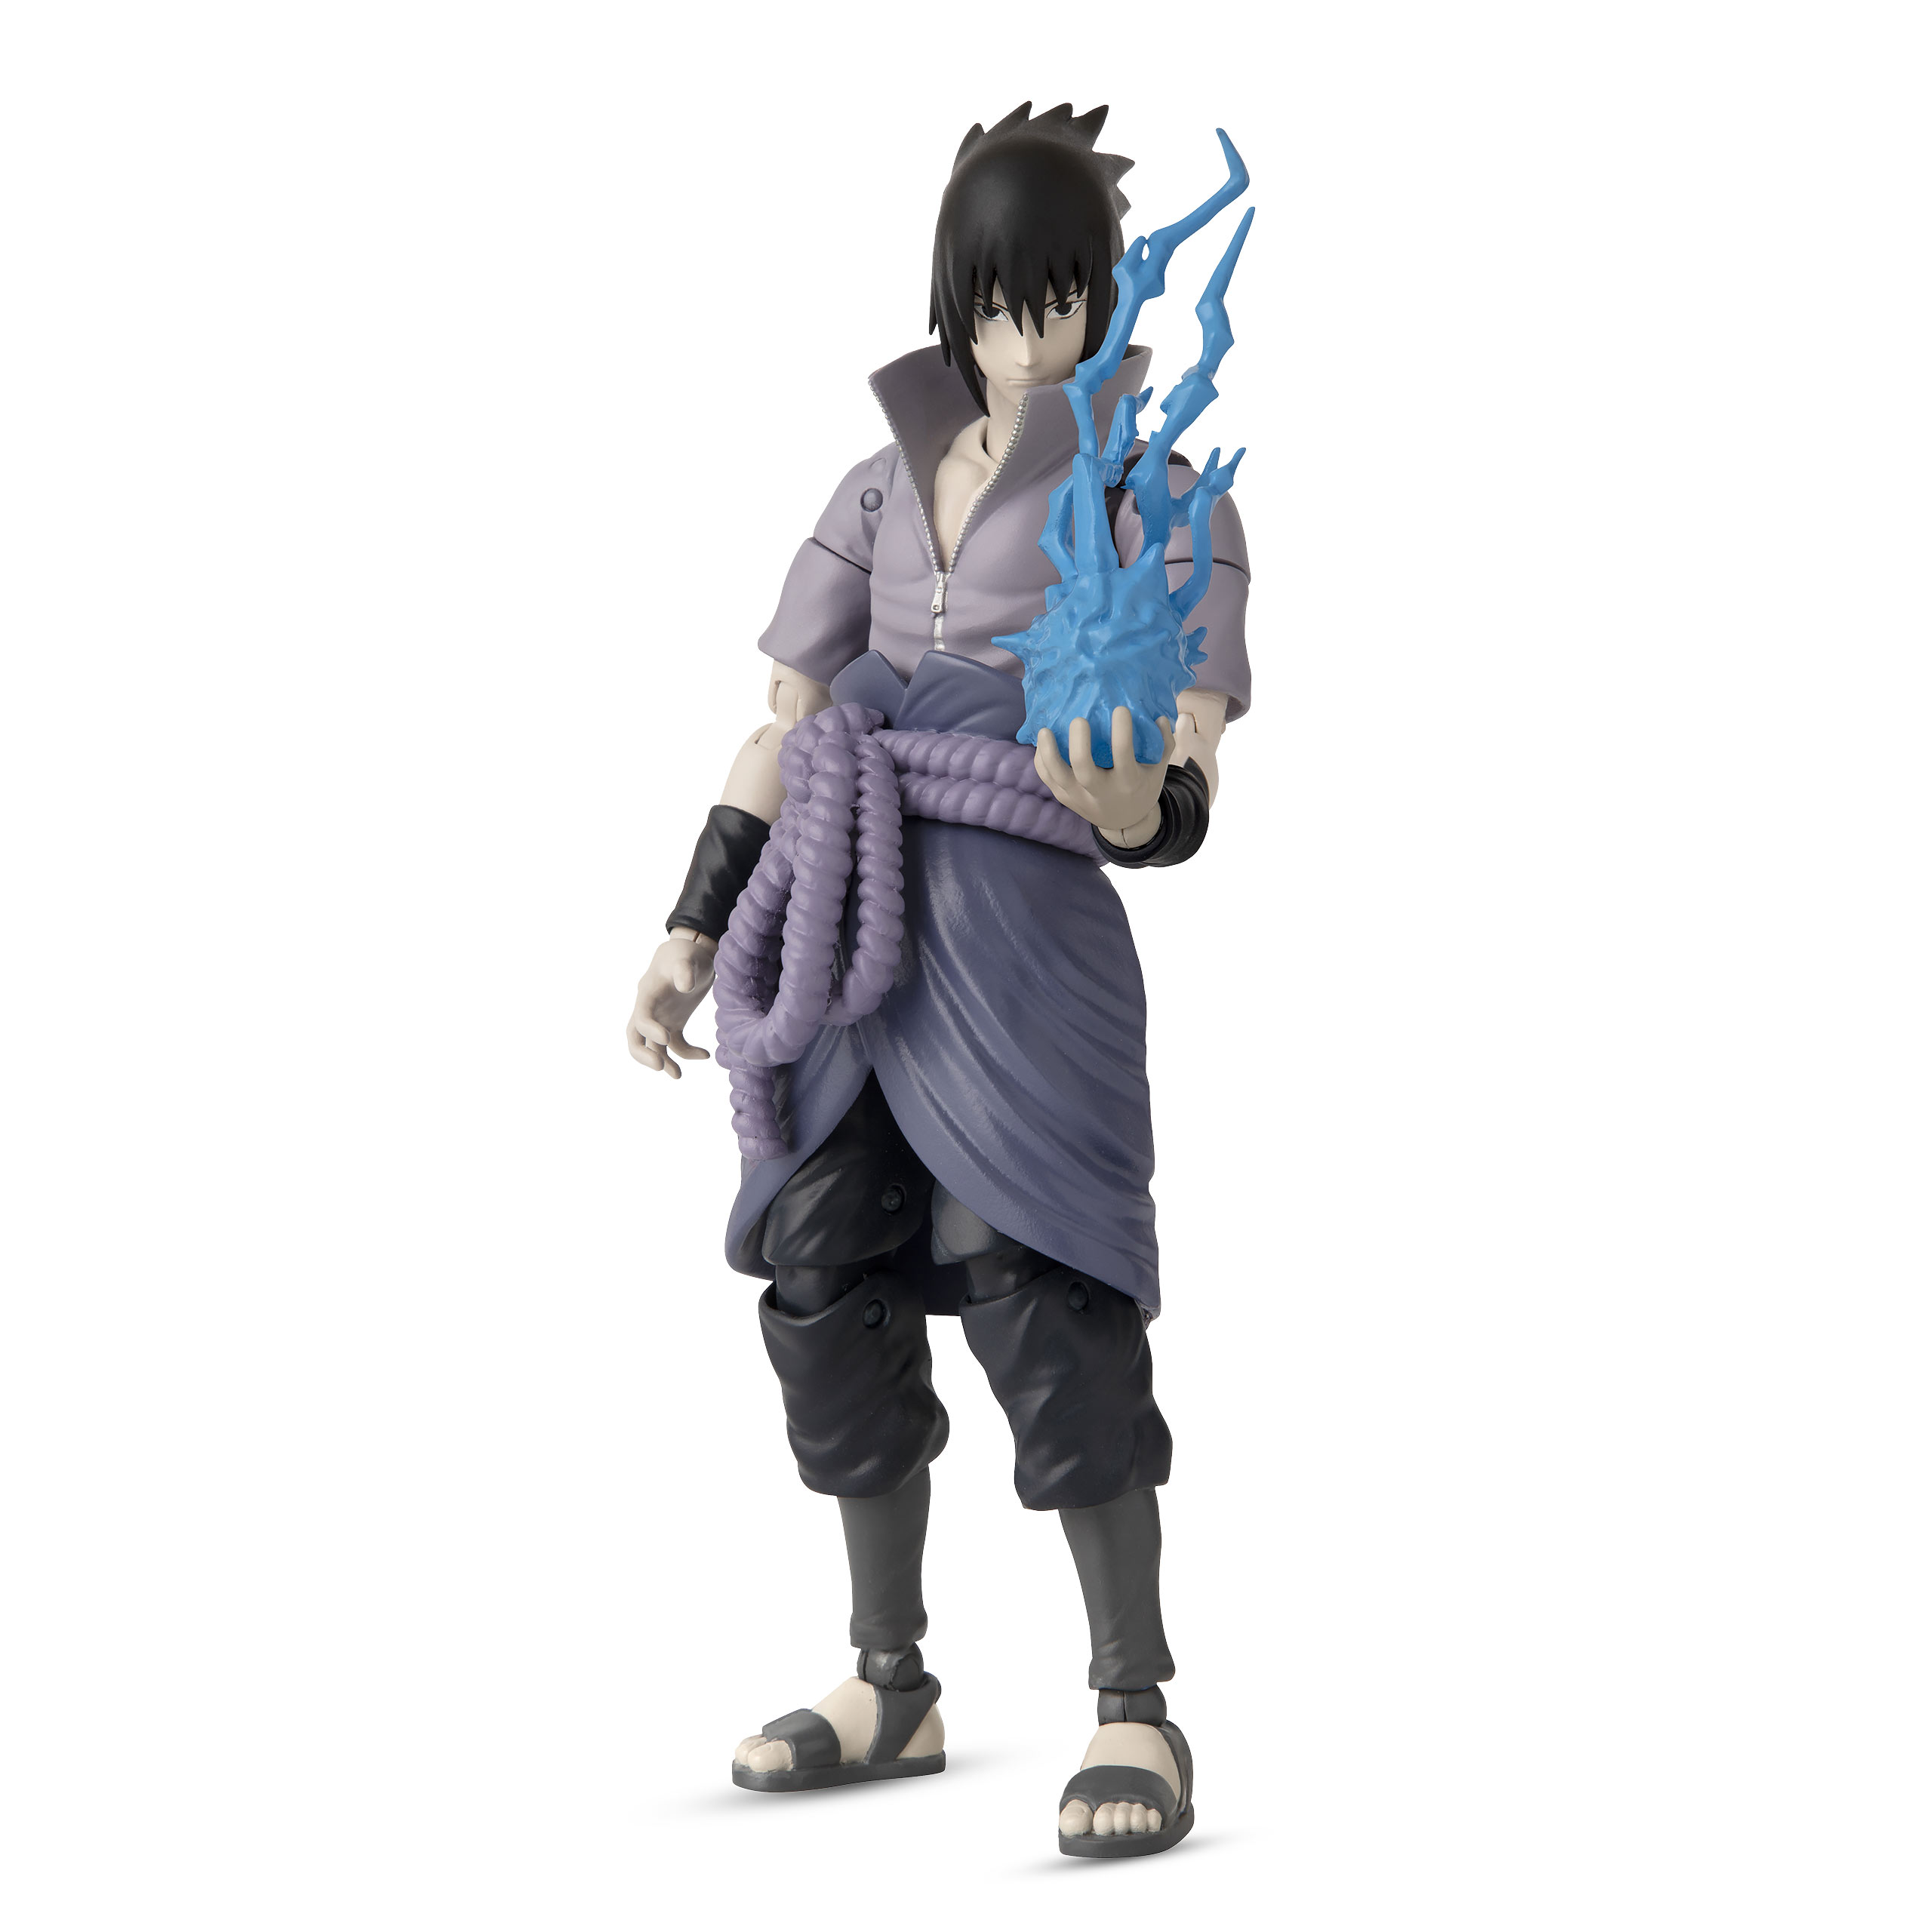 Naruto Shippuden - Uchiha Sasuke Anime Heroes Actionfigur